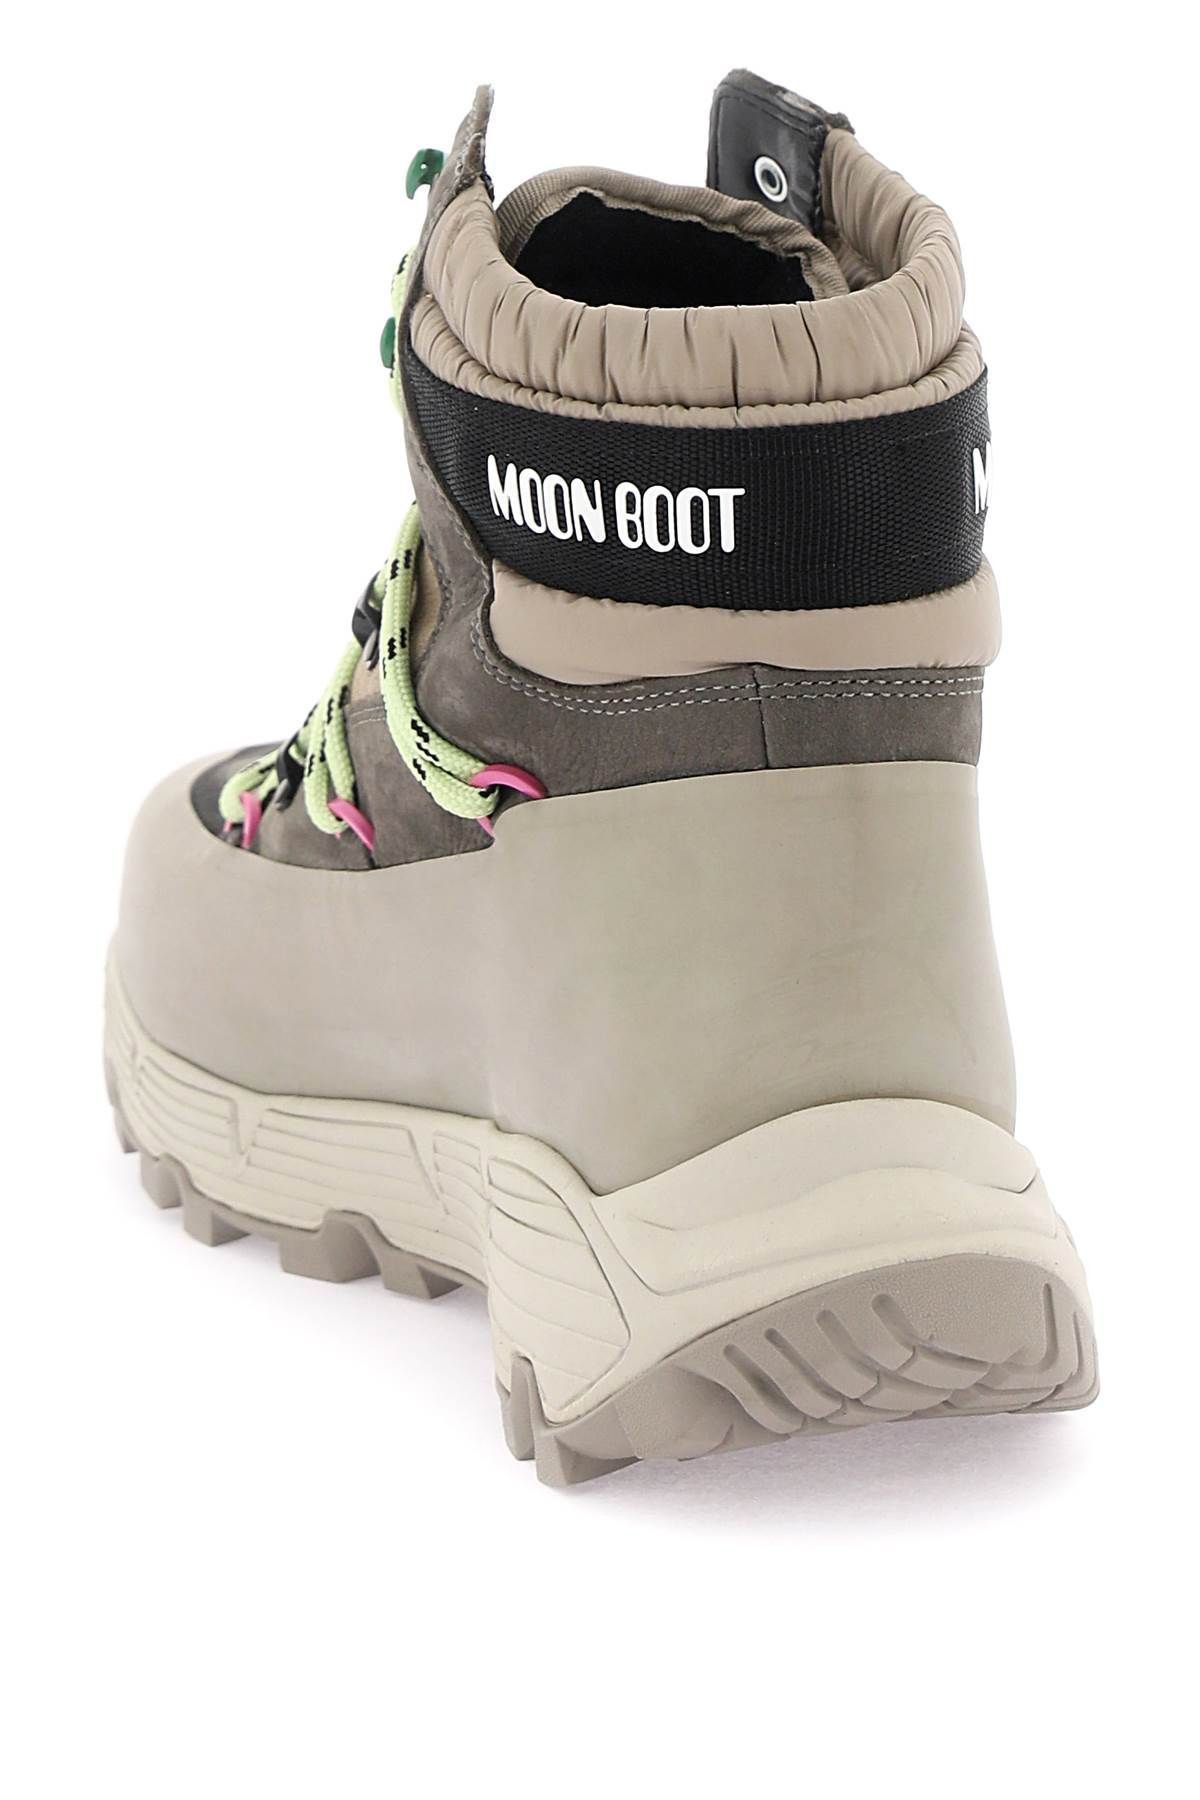 Moon Boot - Tech Hiker Hiking Boots Size EU 41 for Men - 2